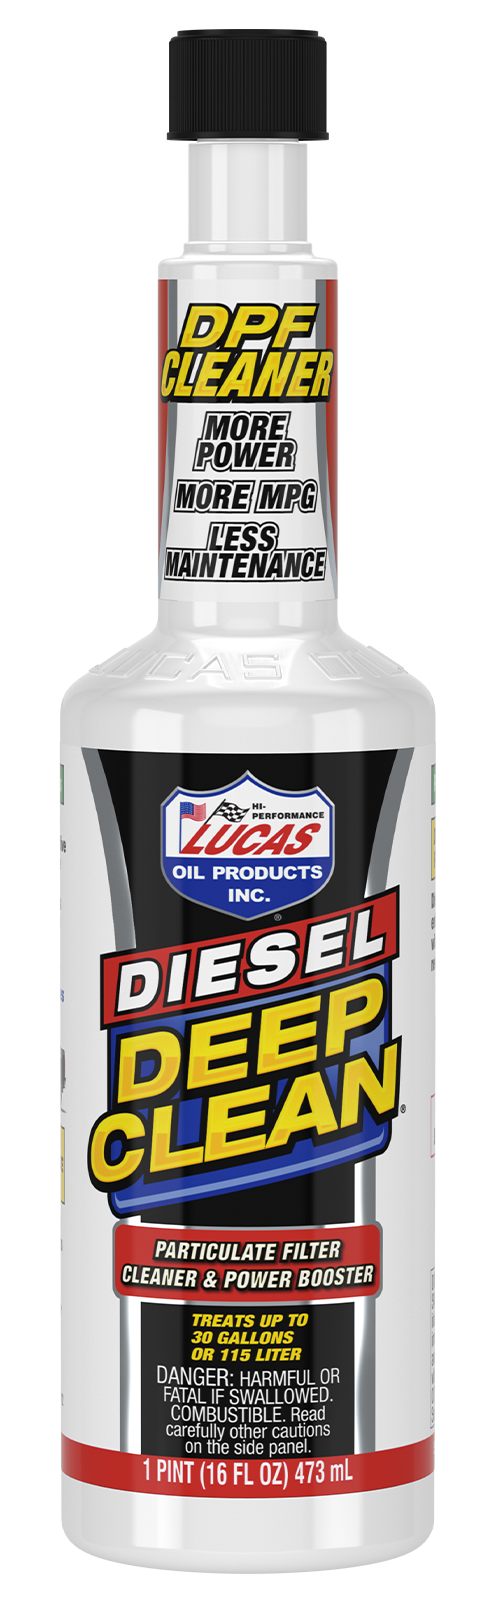 Lucas Oil Products Limpieza Profunda Diesel